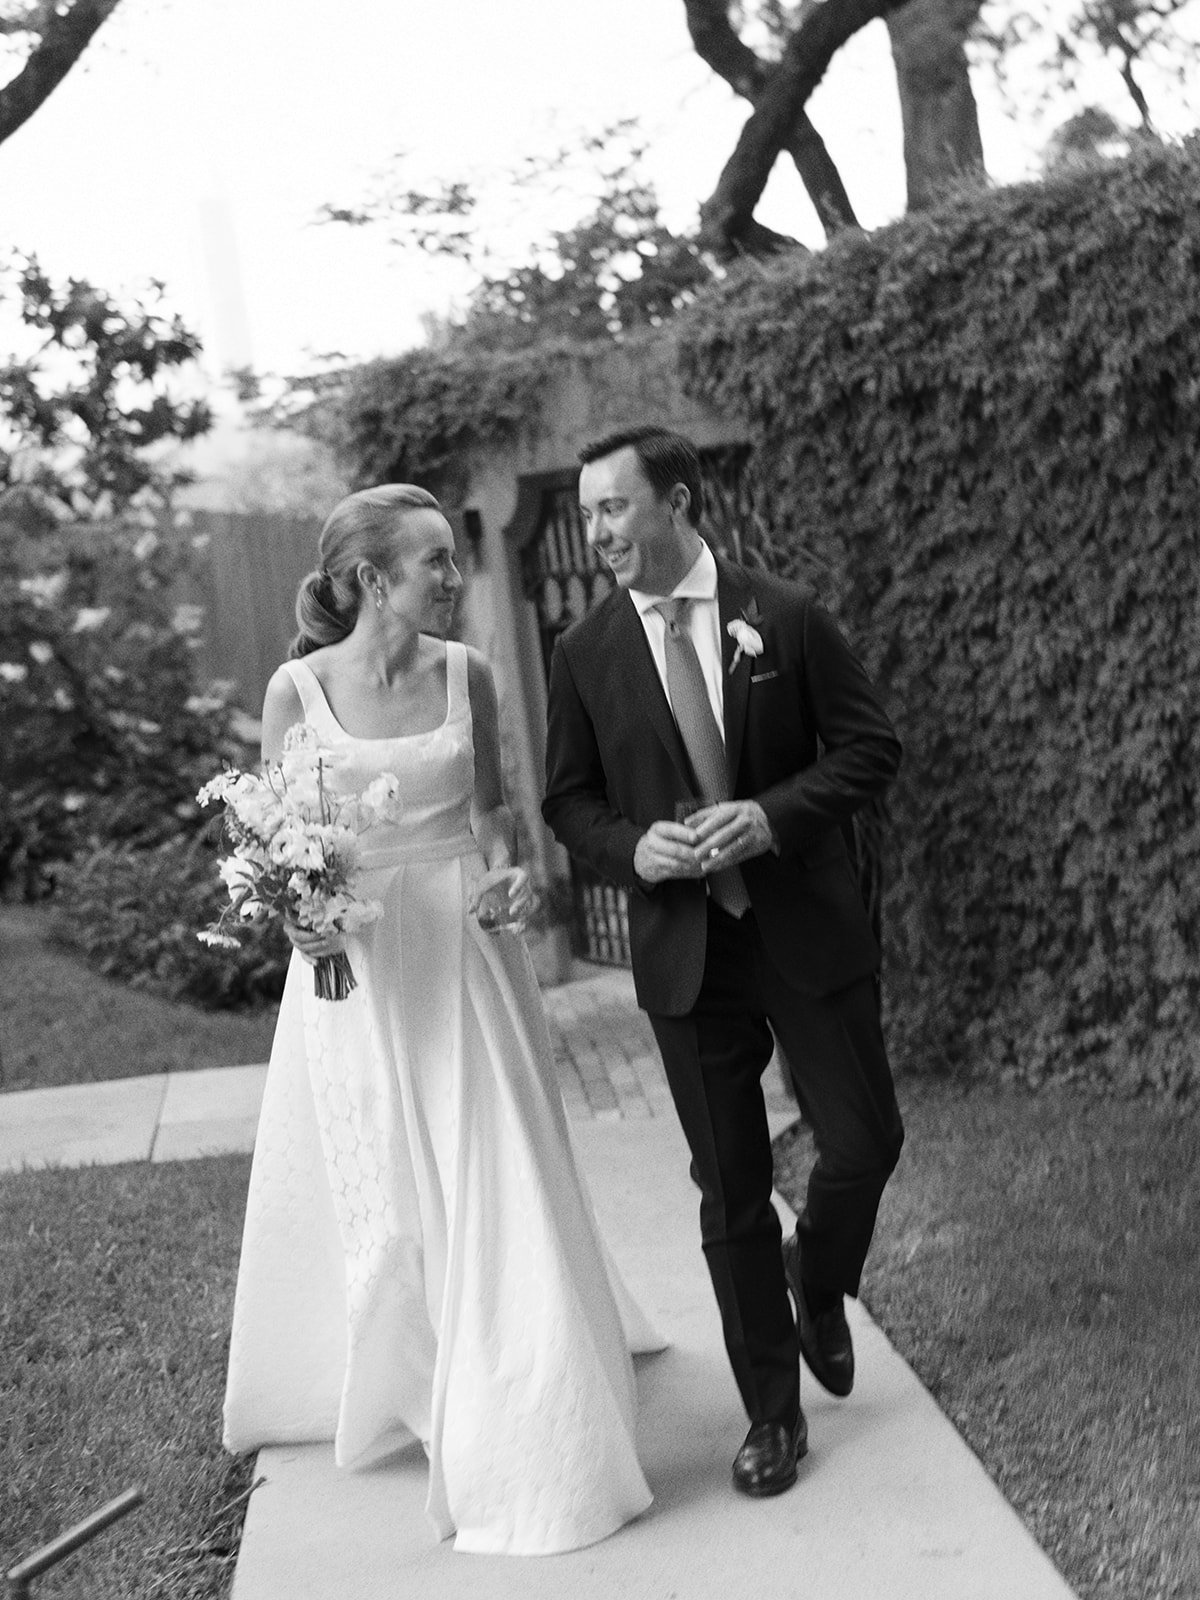 Best-Austin-Wedding-Photographers-Elopement-Film-35mm-Asheville-Santa-Barbara-Hotel-Saint-Cecilia-88.jpg